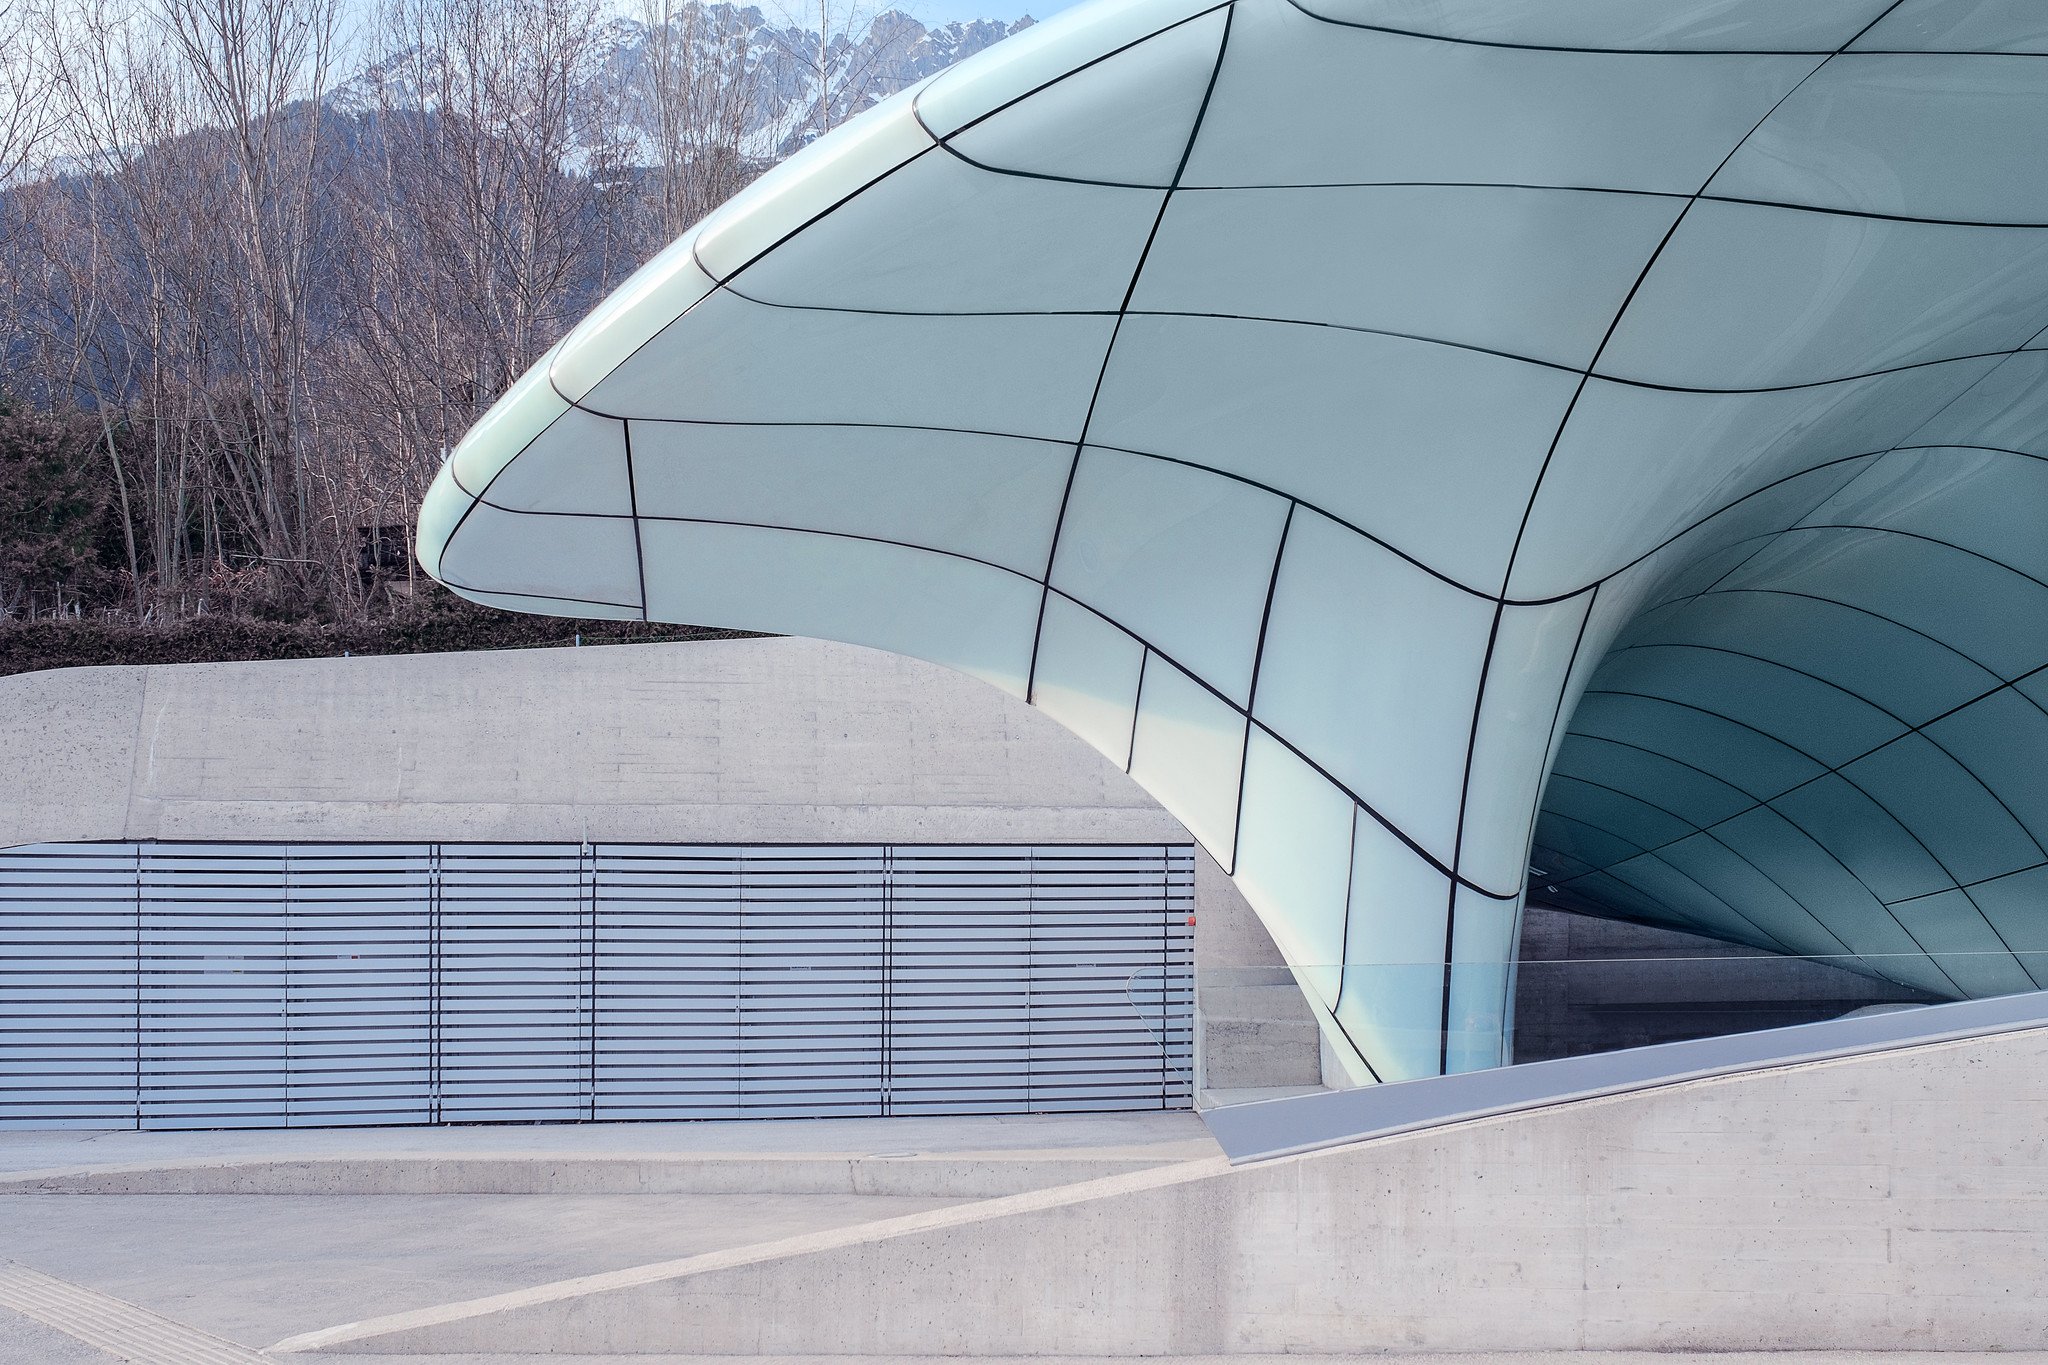 Hungerburgbahn in Innsbruck, Austria by Zaha Hadid Architects